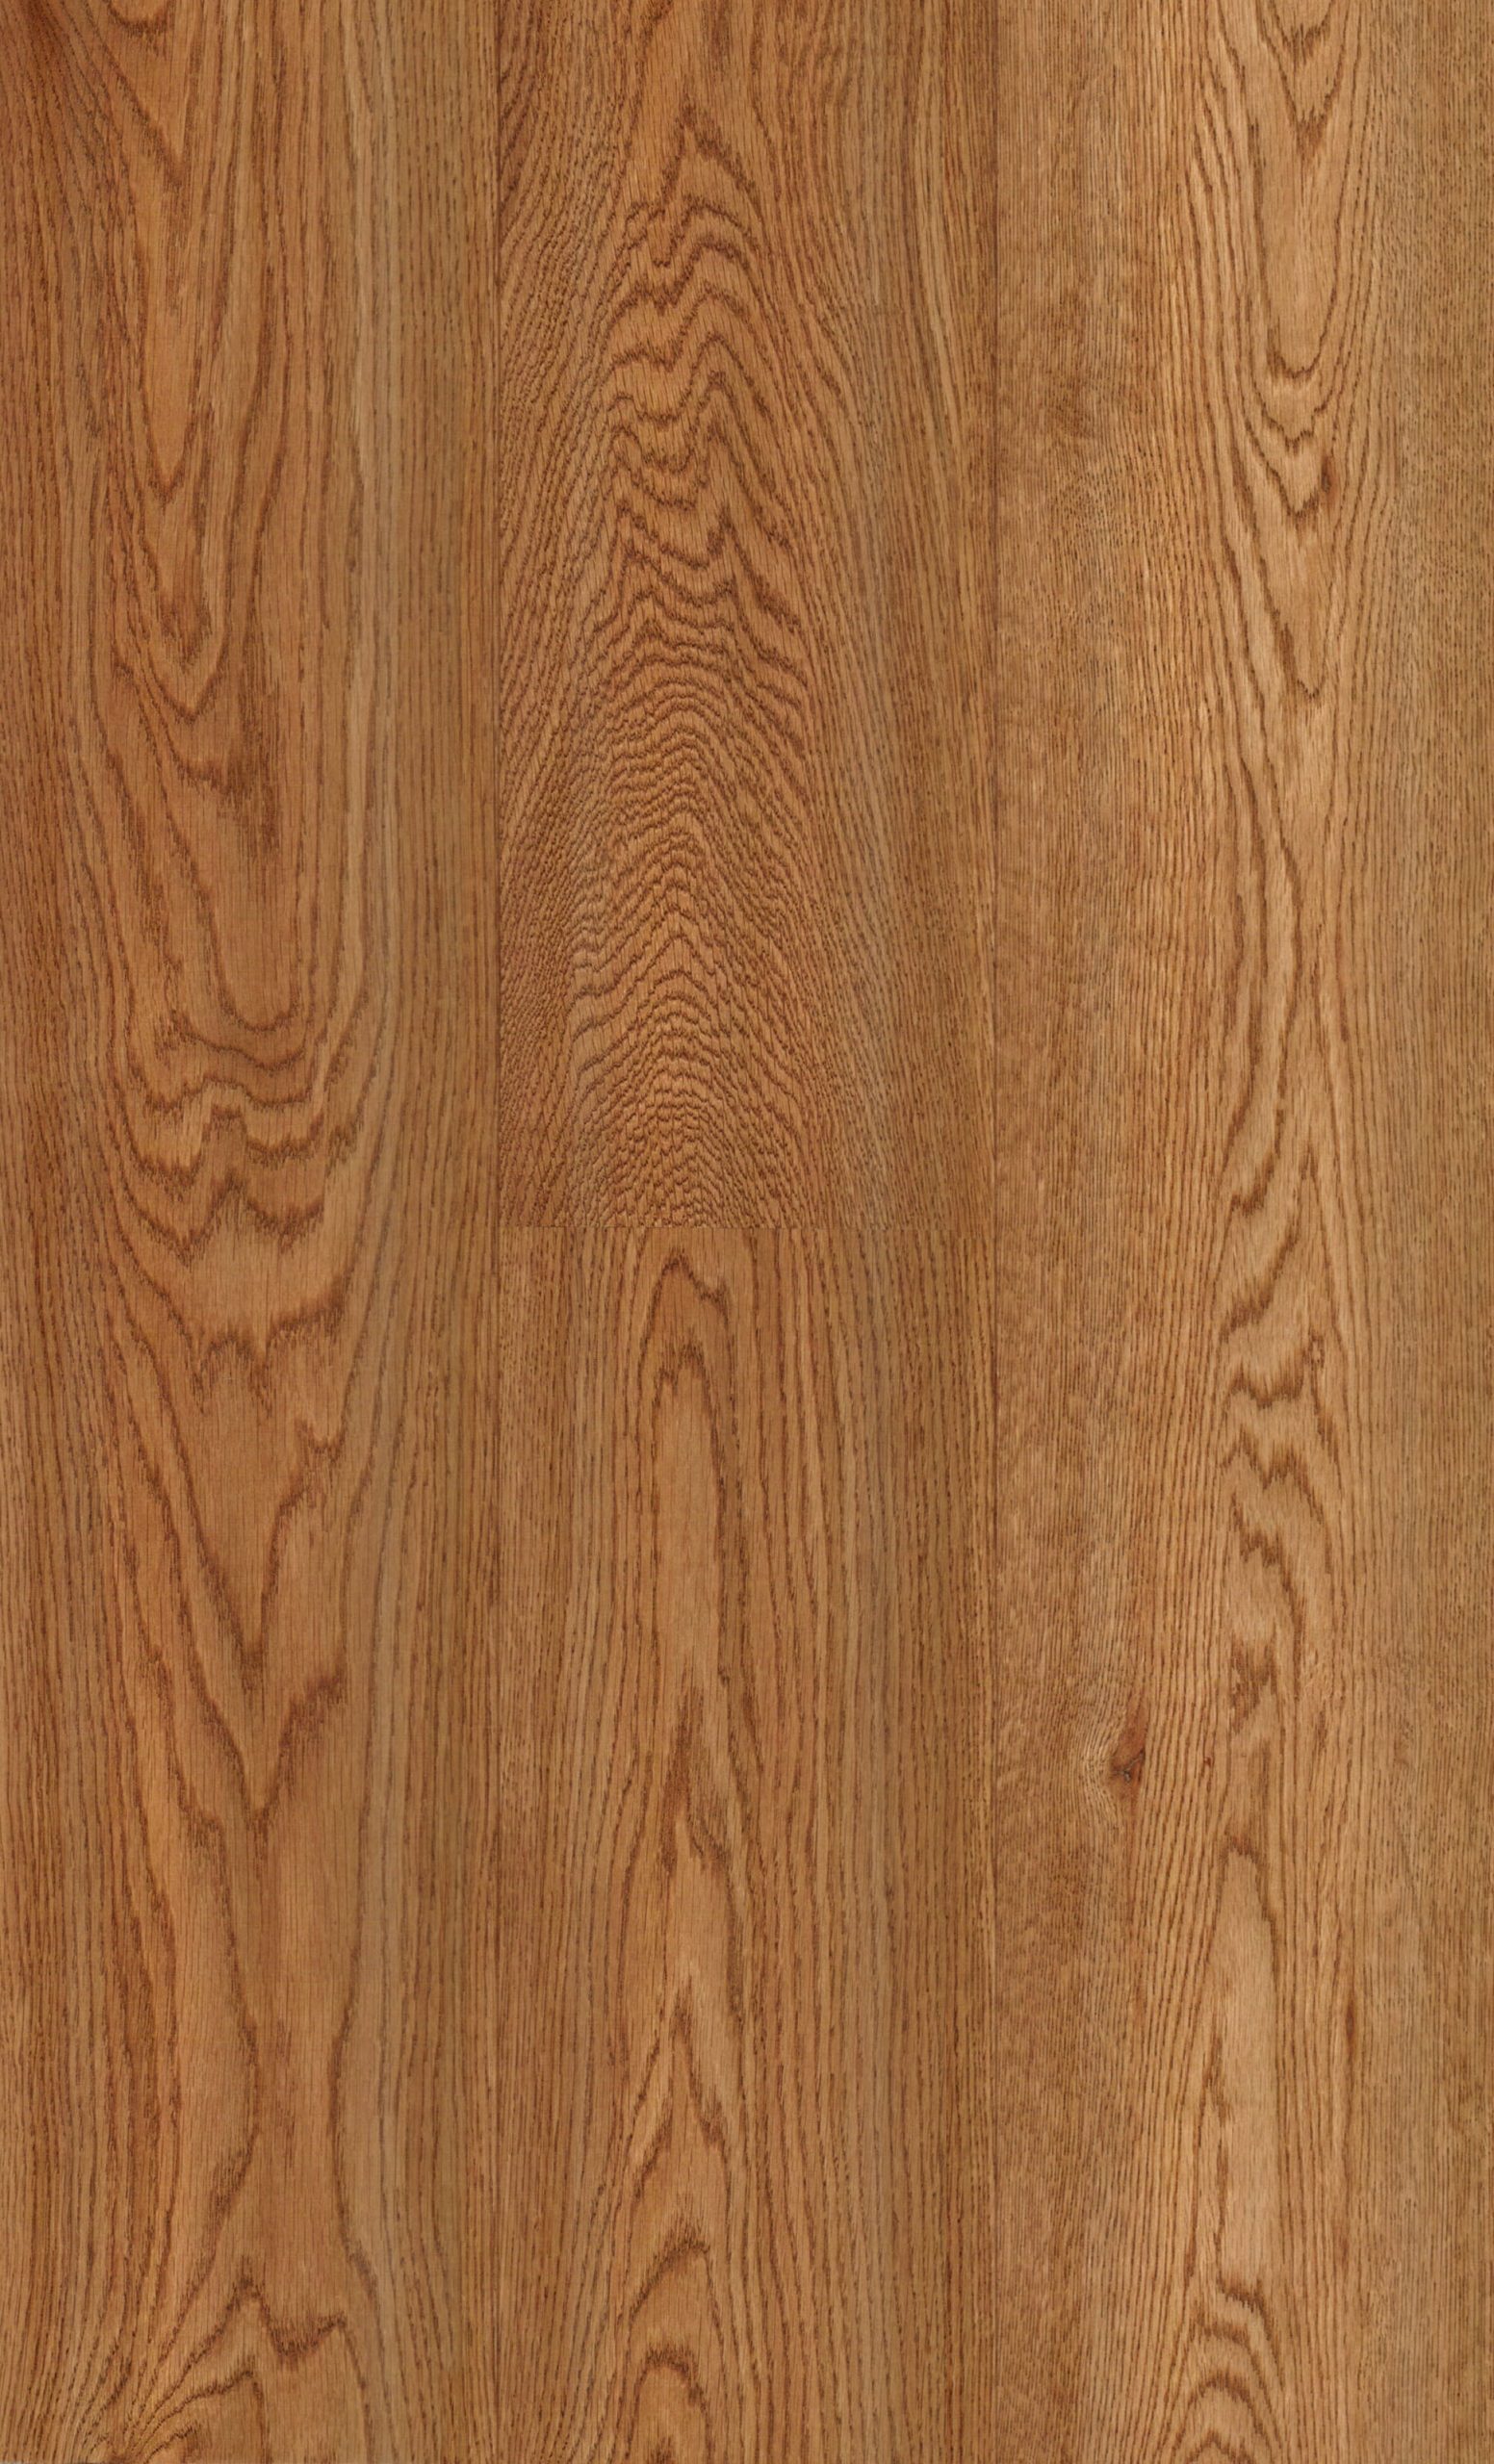 Oak-Caramel-Engineered-Hardwood-Flooring-TG9104